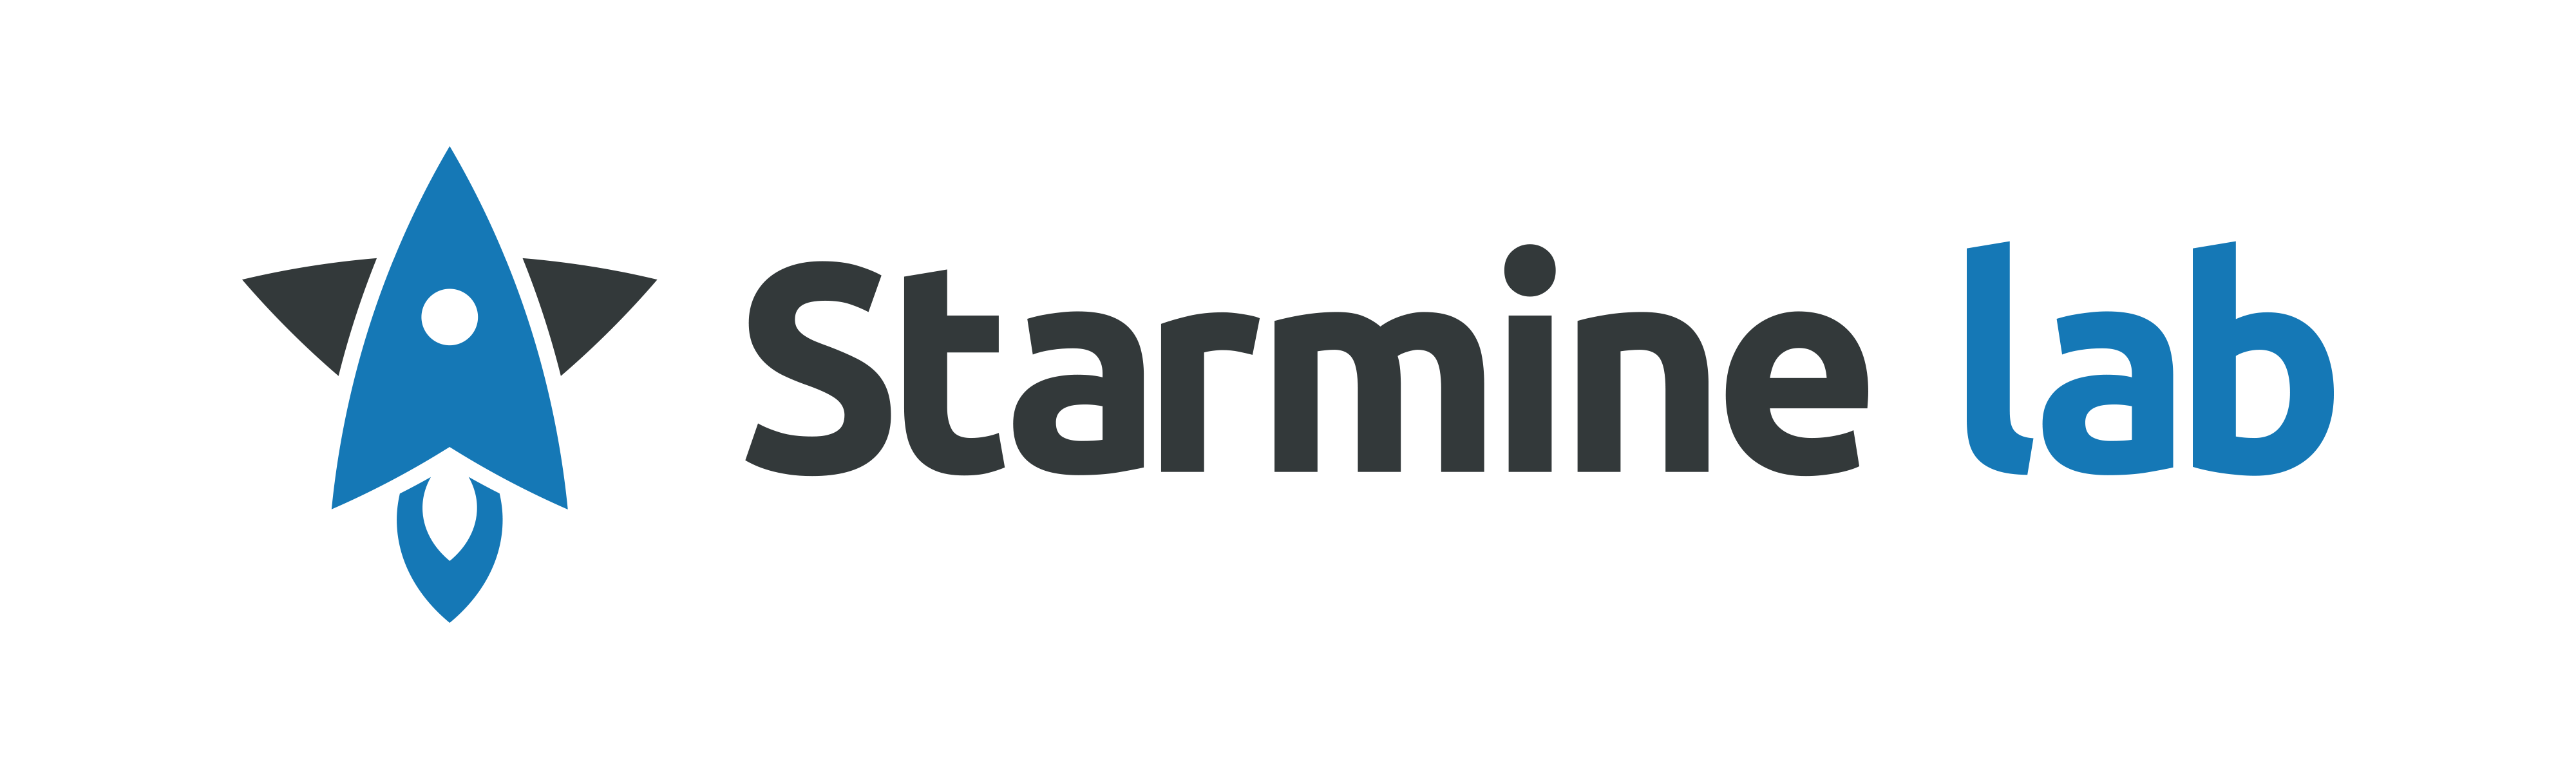 Starmine lab logo